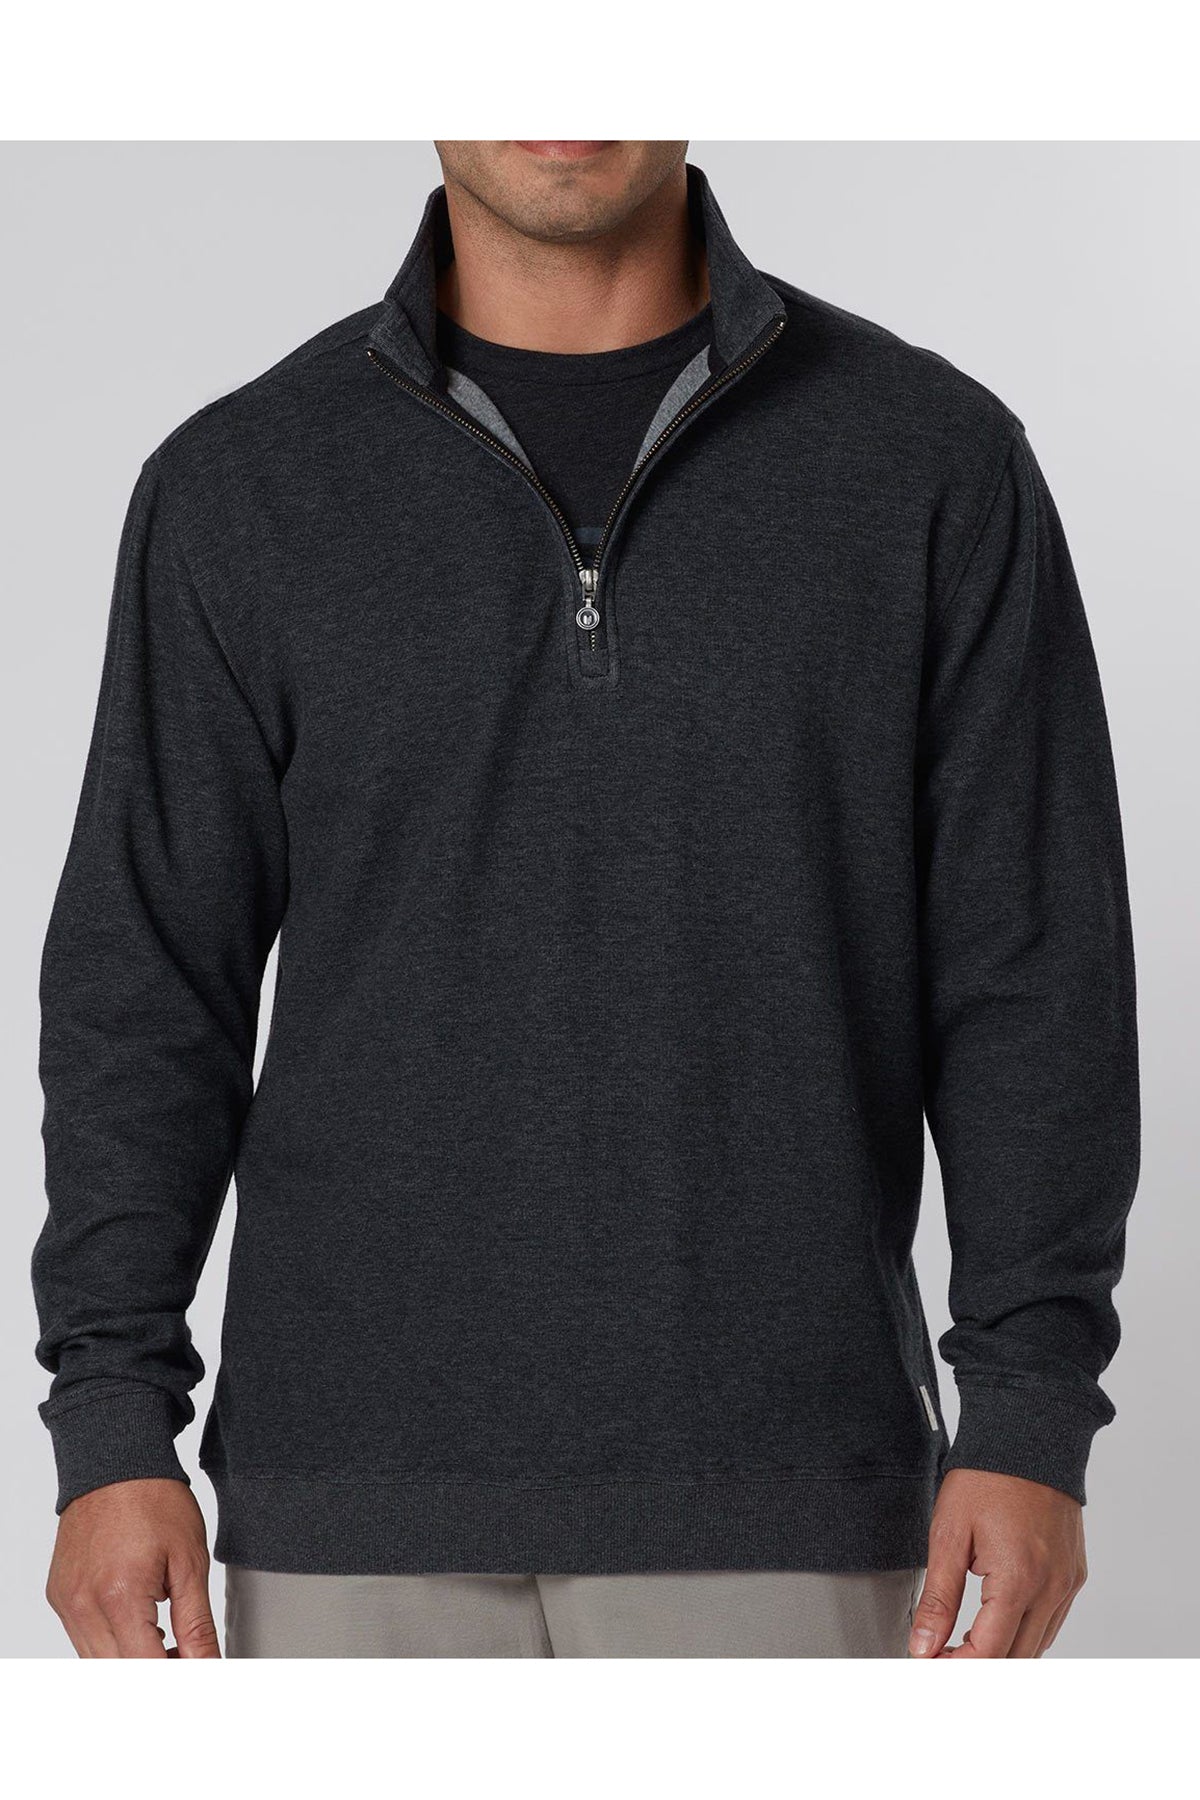 Linksoul Black Heather LS4100 custom embroidered sweatshirts